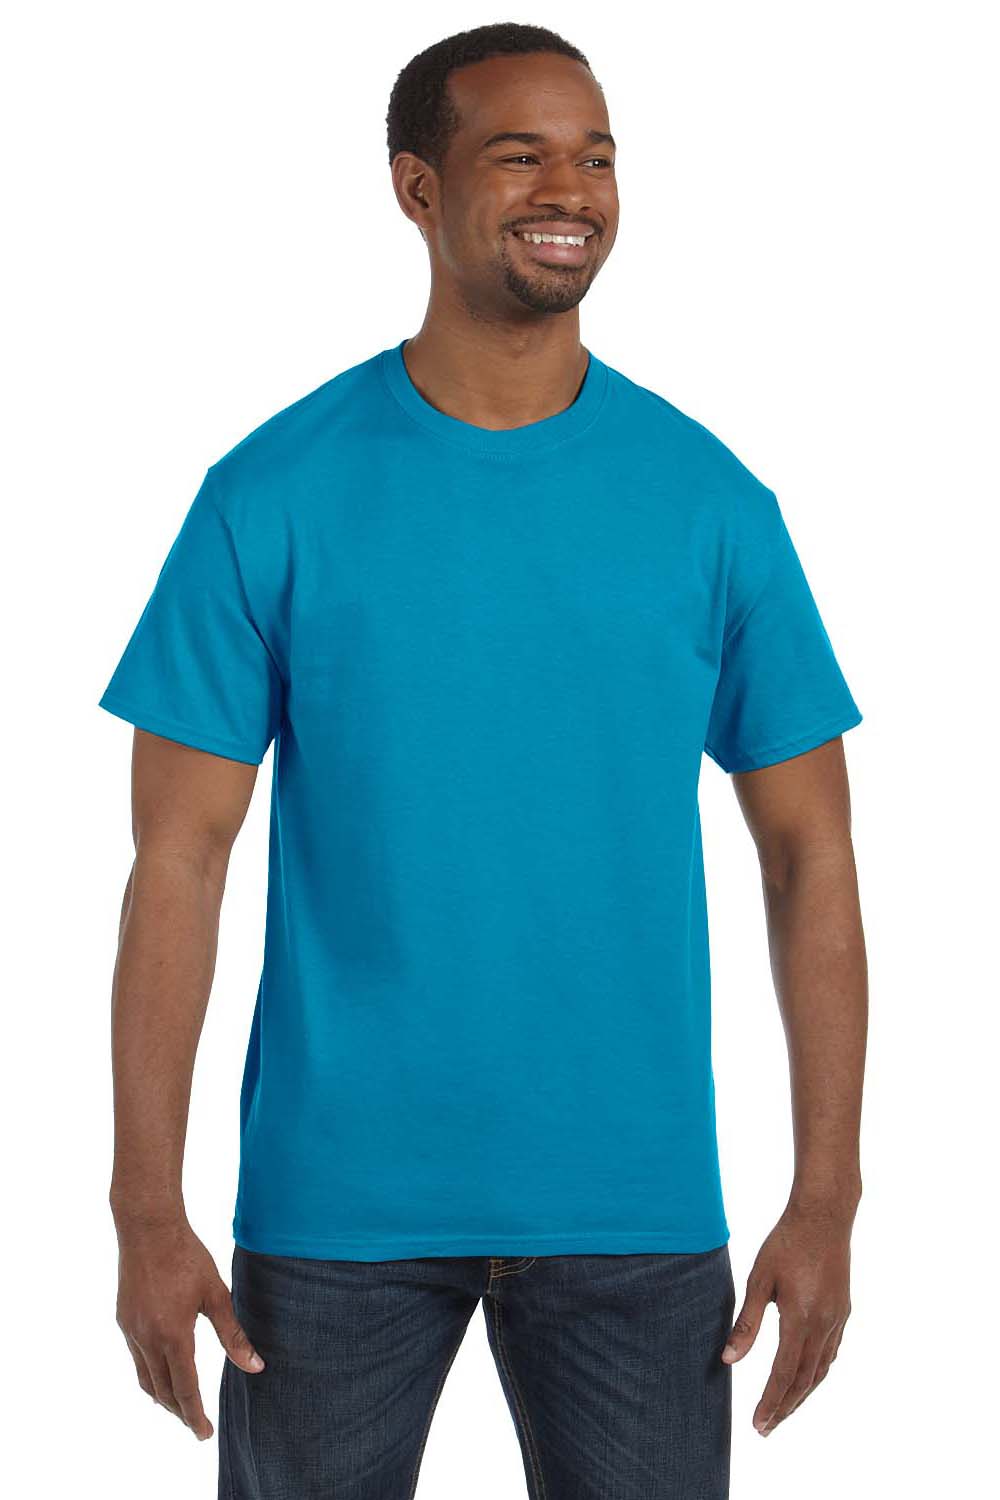 Hanes 5250T Mens ComfortSoft Short Sleeve Crewneck T-Shirt Teal Blue Front